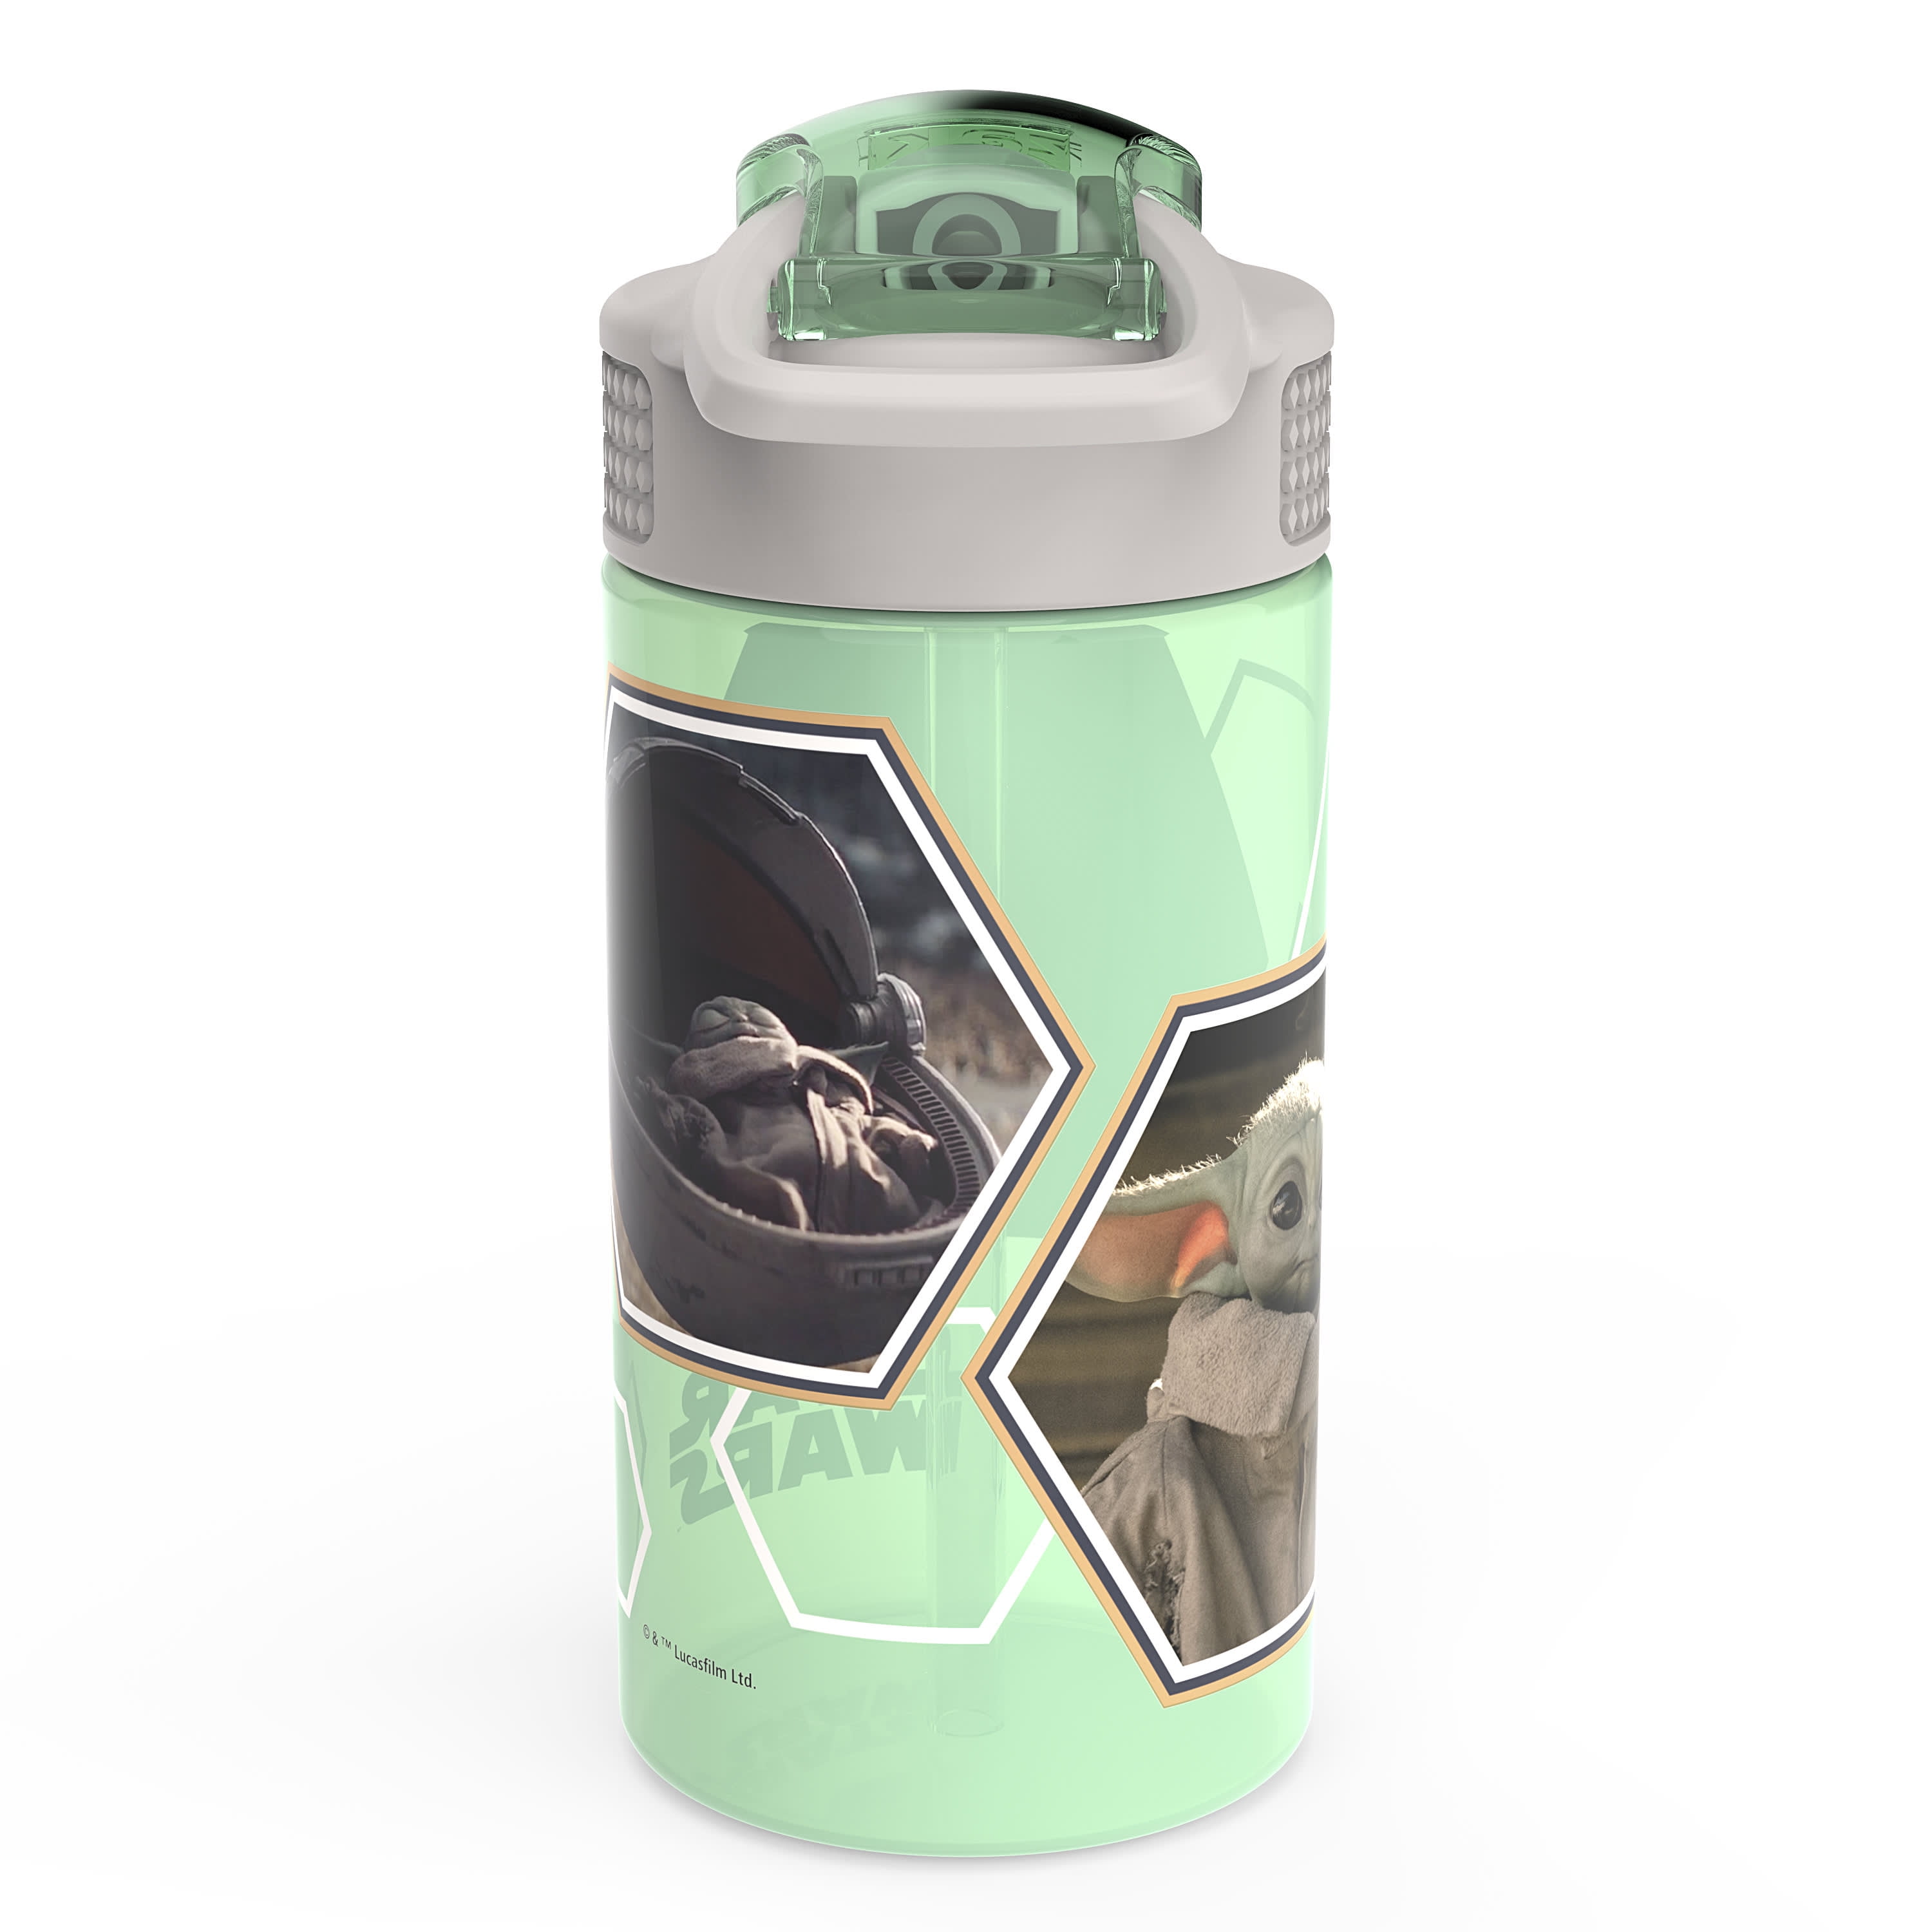 Star Wars The Mandalorian Baby Yoda Kids' Plastic Water Bottle 2-Pack Set  $7.99 (Reg. $13) - $3.99/16 Oz Bottle - Fabulessly Frugal